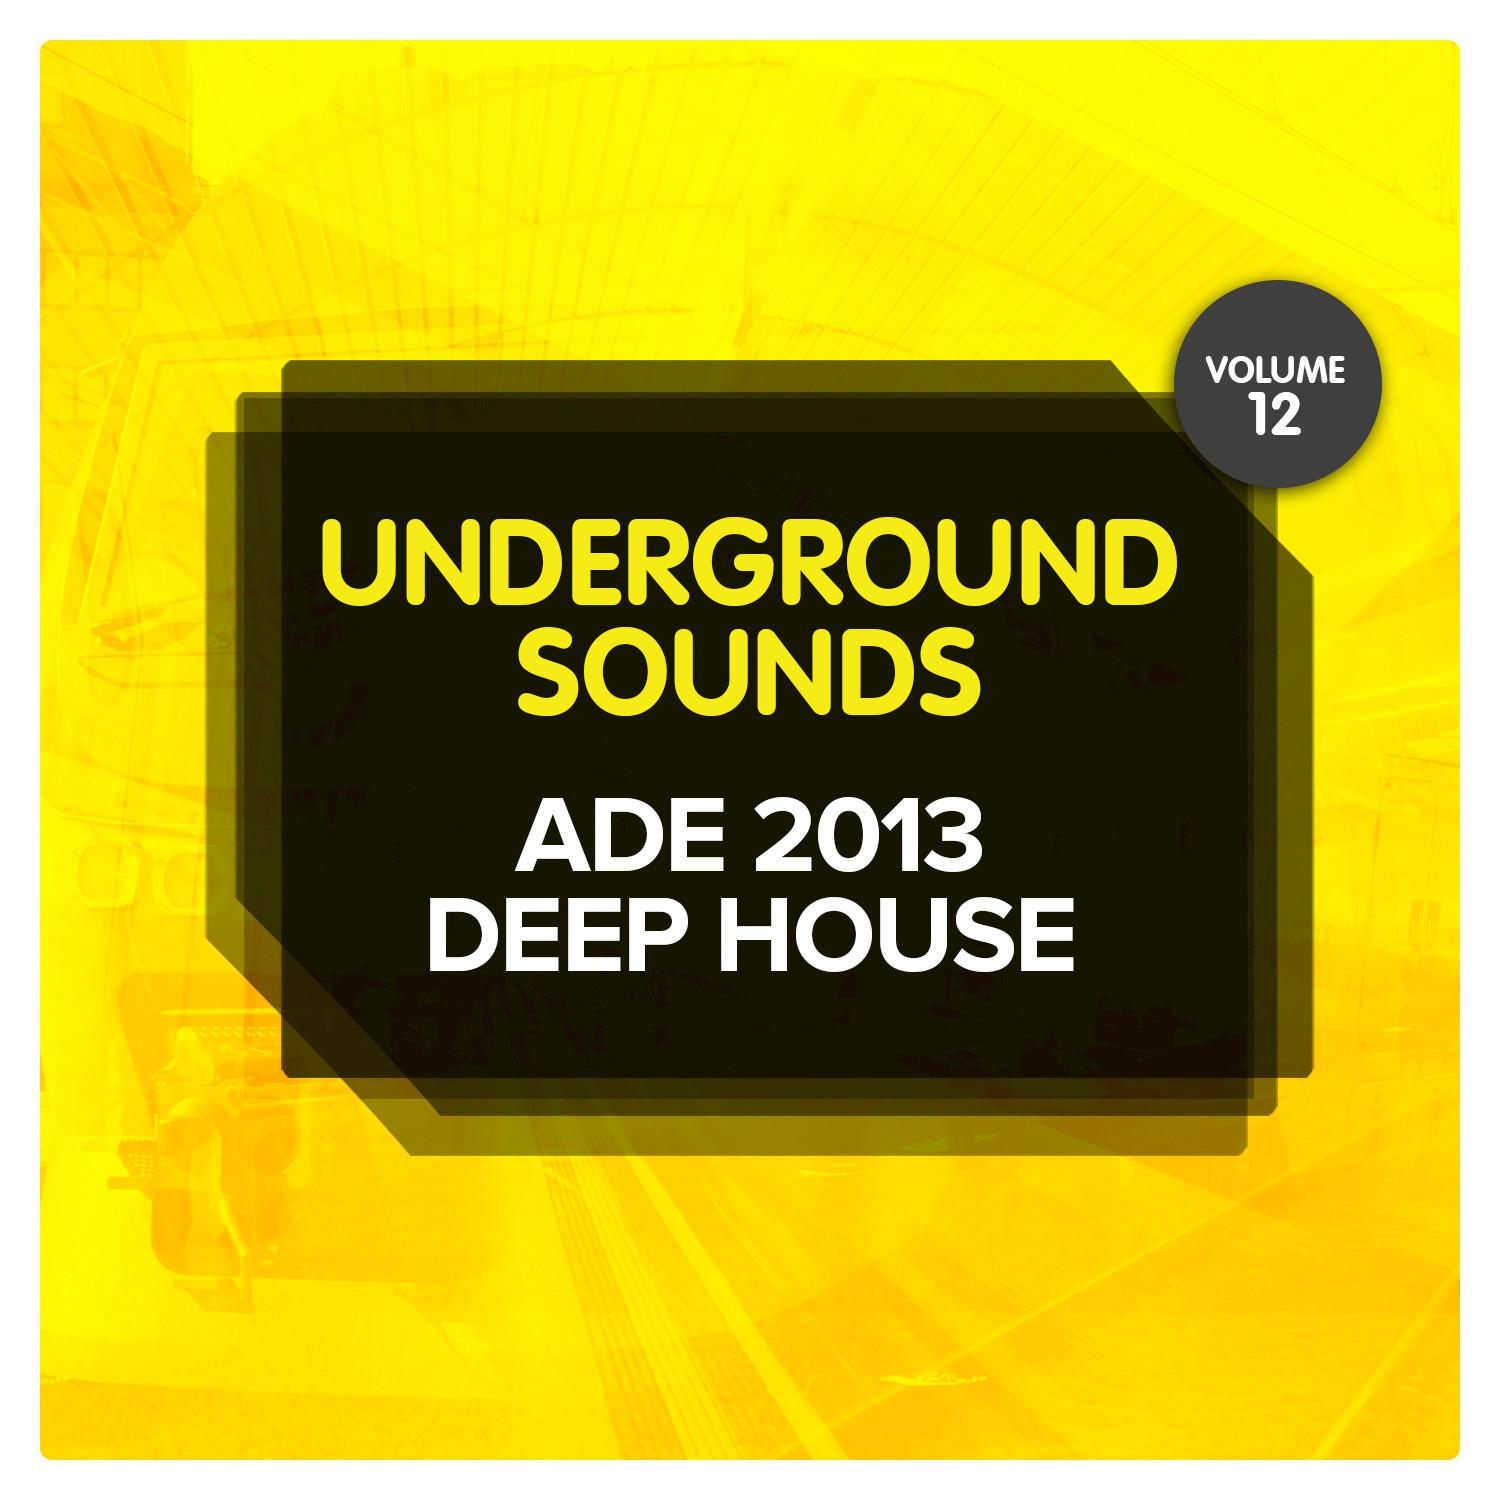 ADE 2013 Deep House - Underground Sounds, Vol. 12